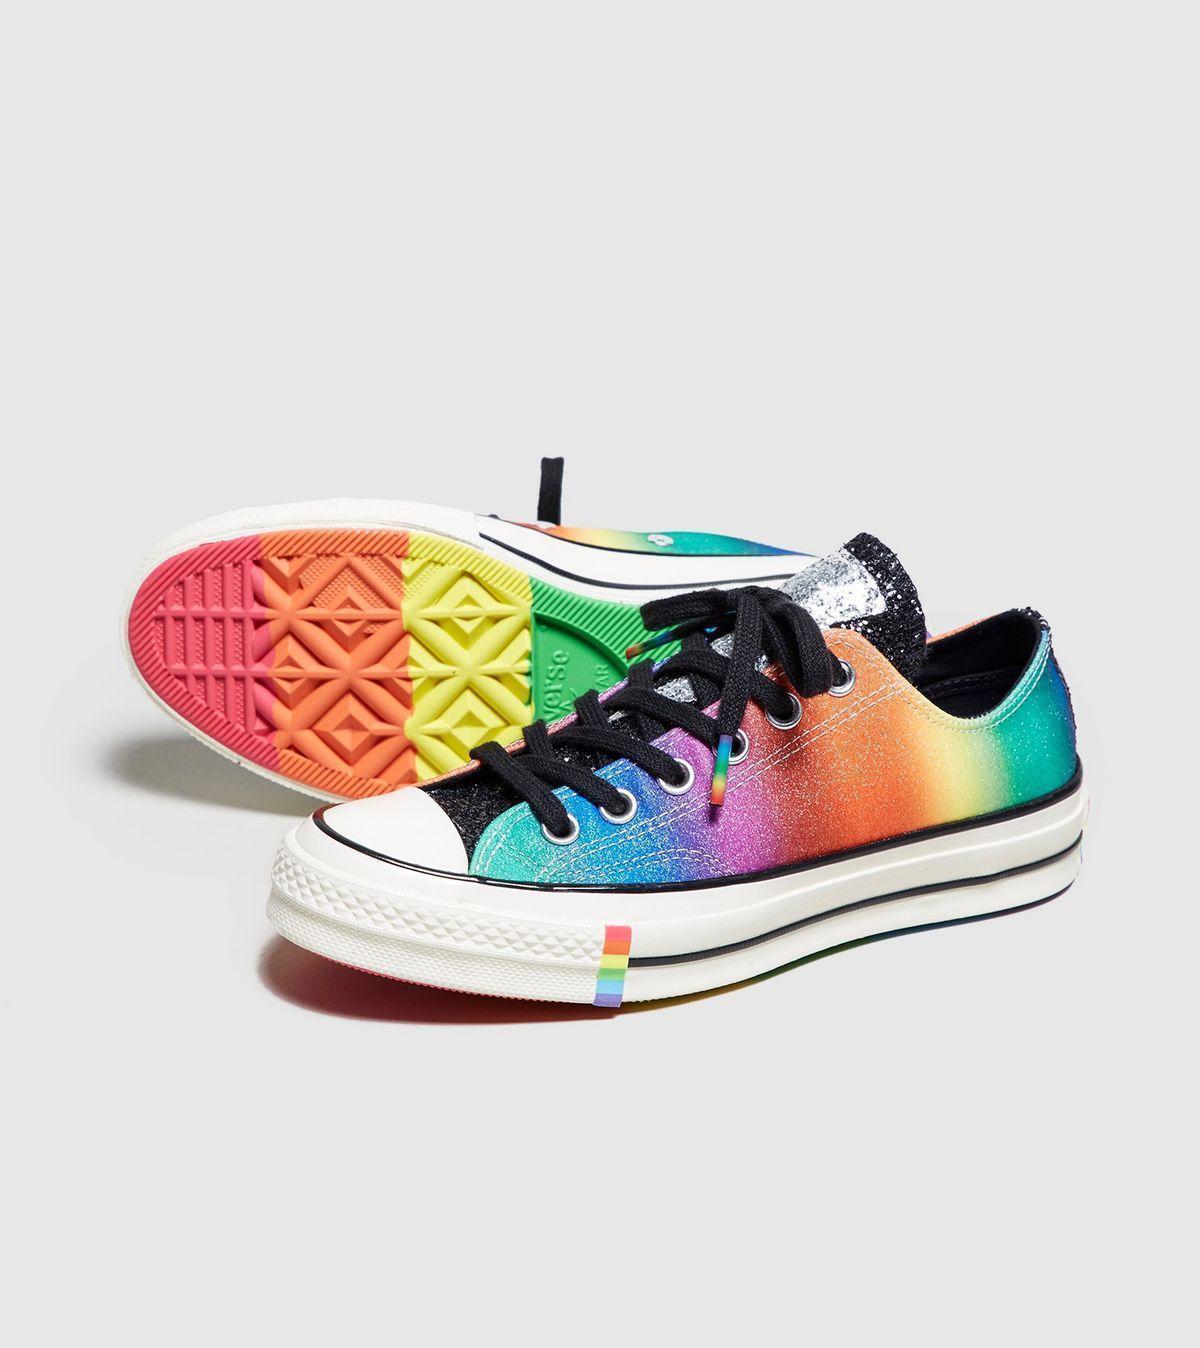 converse pride shoes uk